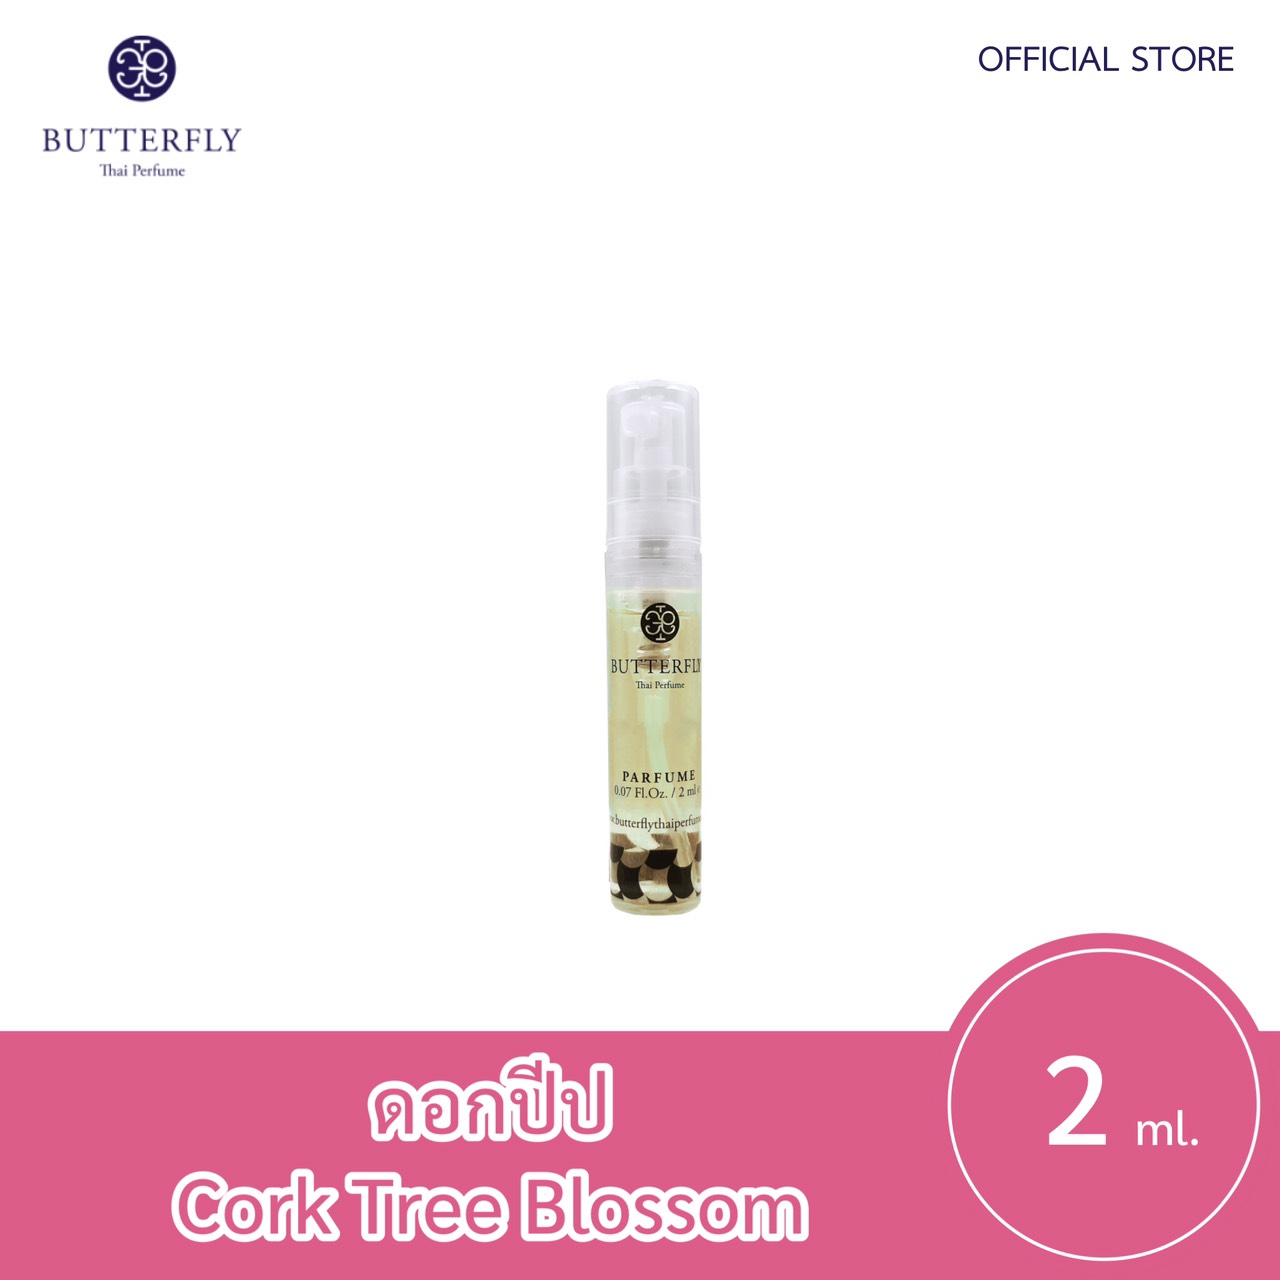 Butterfly Thai Perfume - น้ำหอมบัตเตอร์ฟลาย ไทย เพอร์ฟูม  ขนาดทดลอง 2ml.  กลิ่น ดอกปีบปริมาณ (มล.) 2